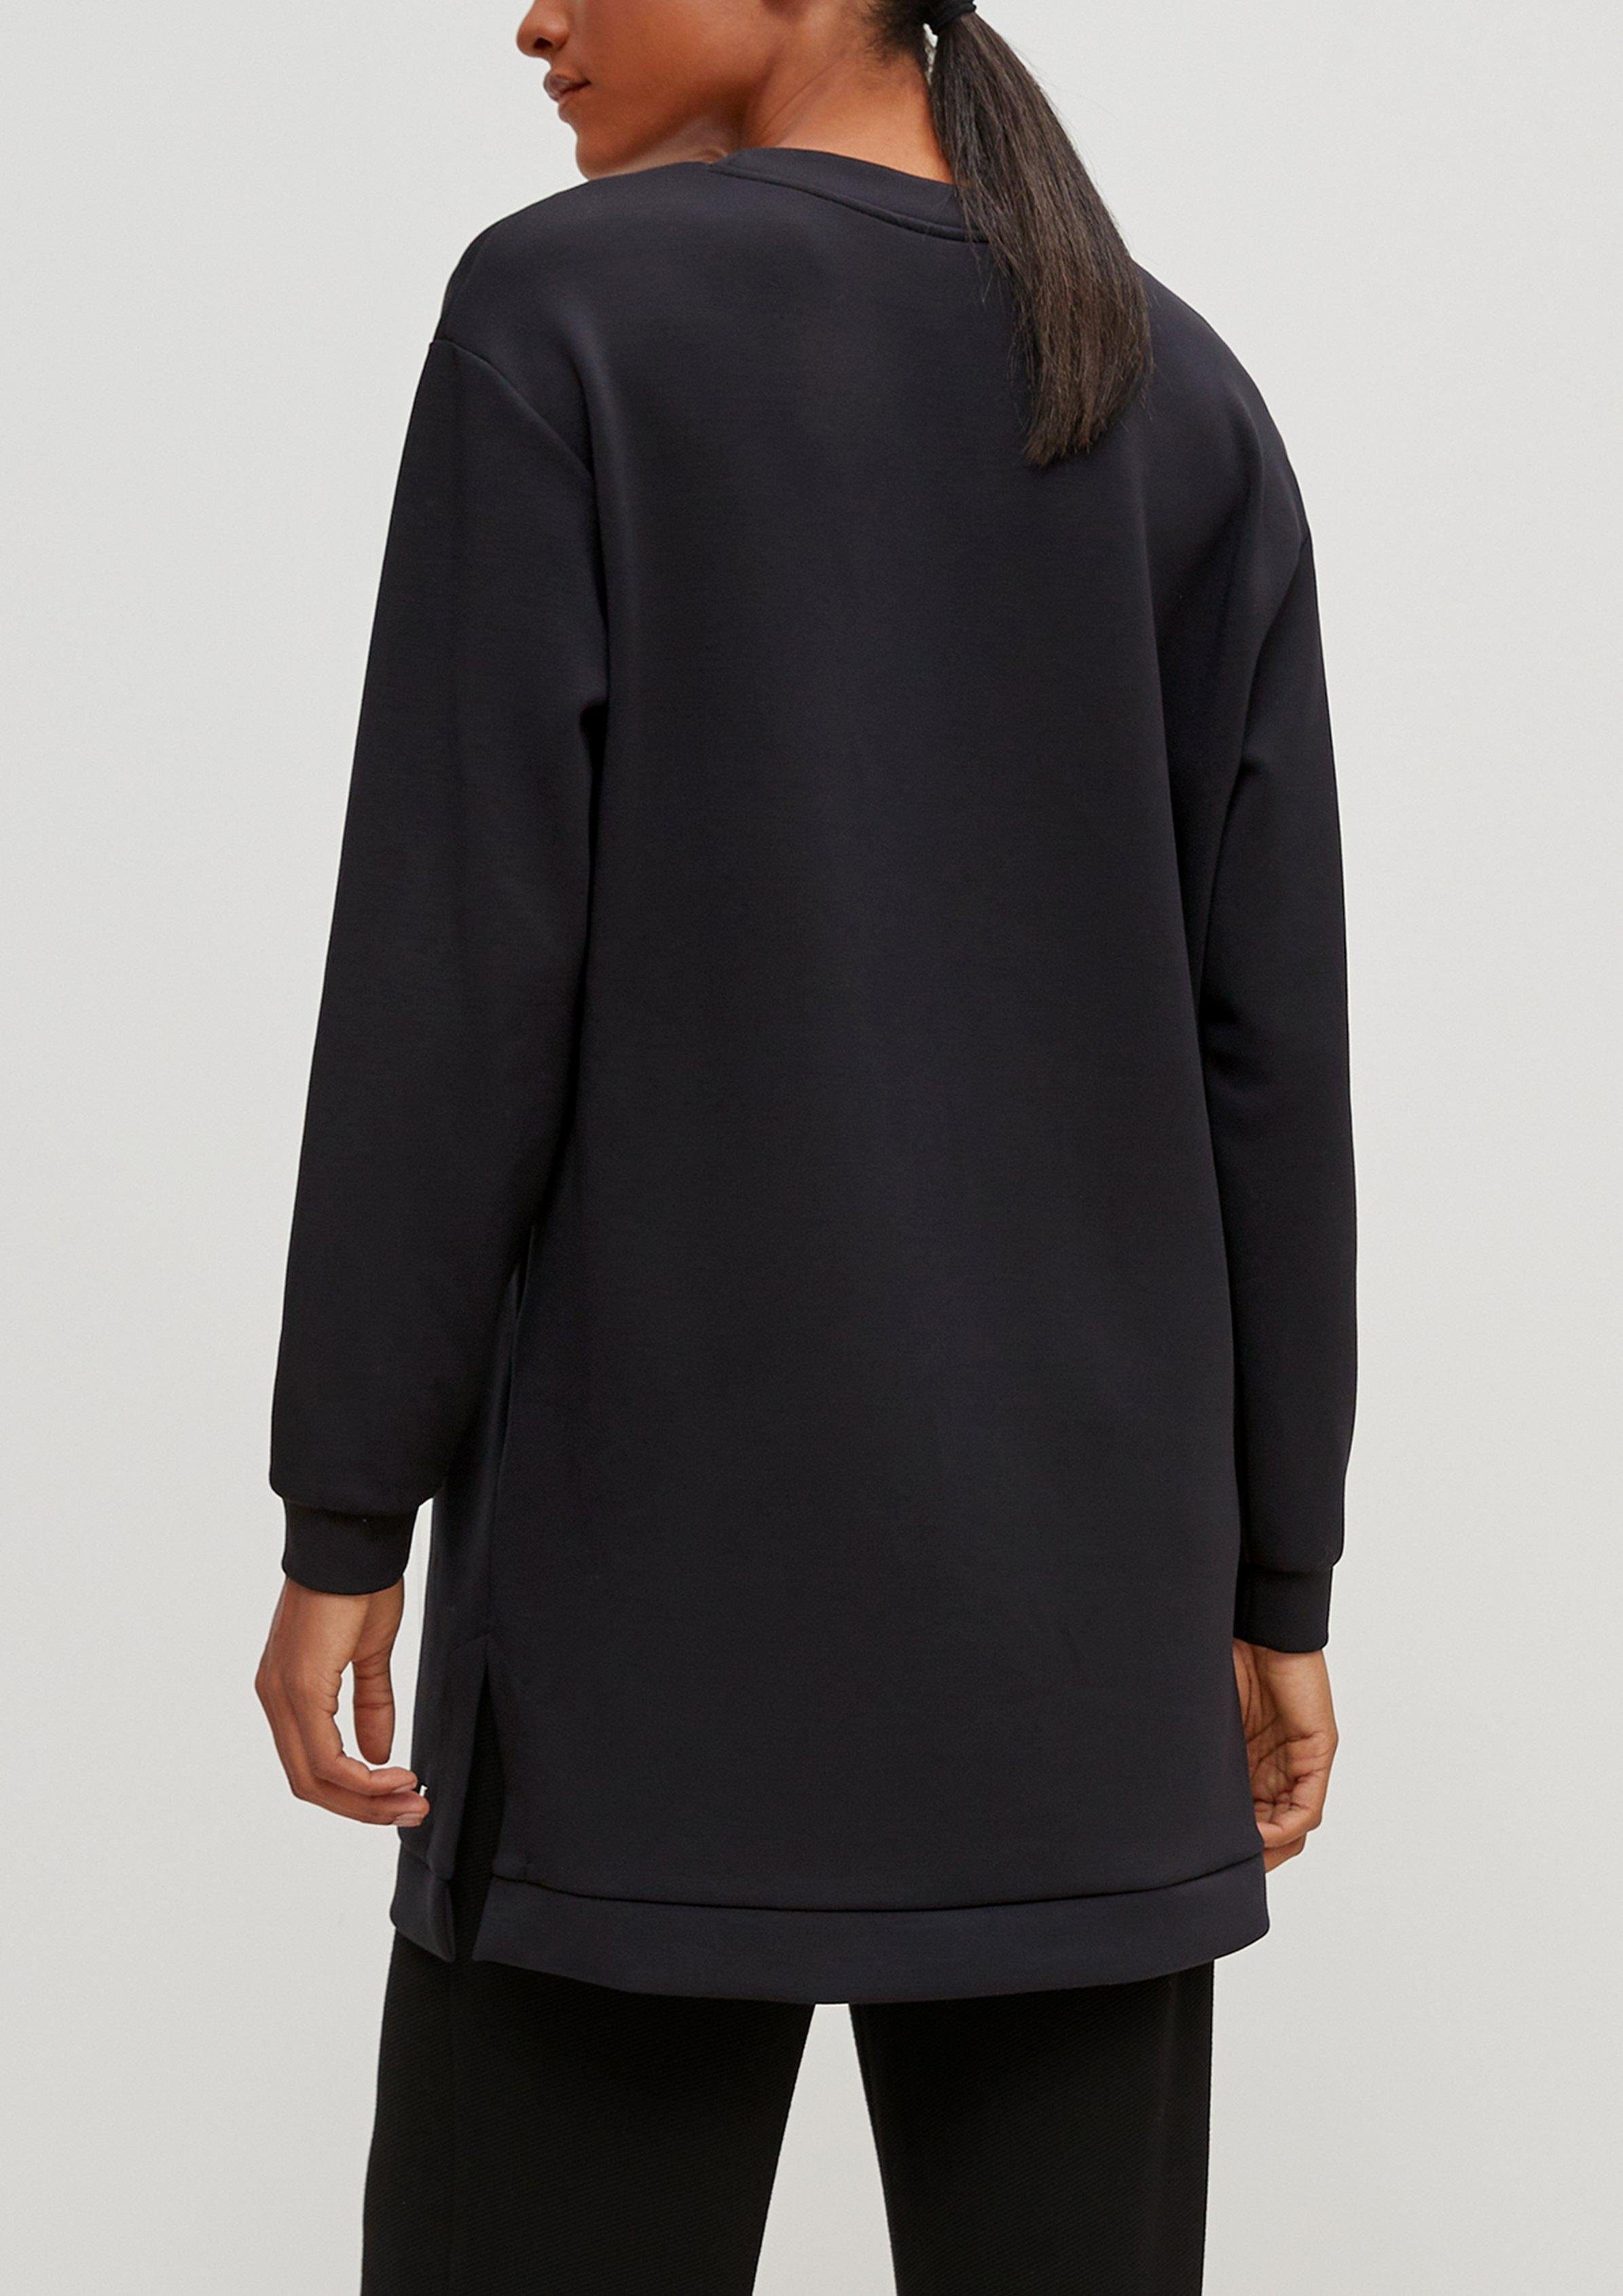 Comma aus schwarz Sweatshirt Modalmix Sweatshirt